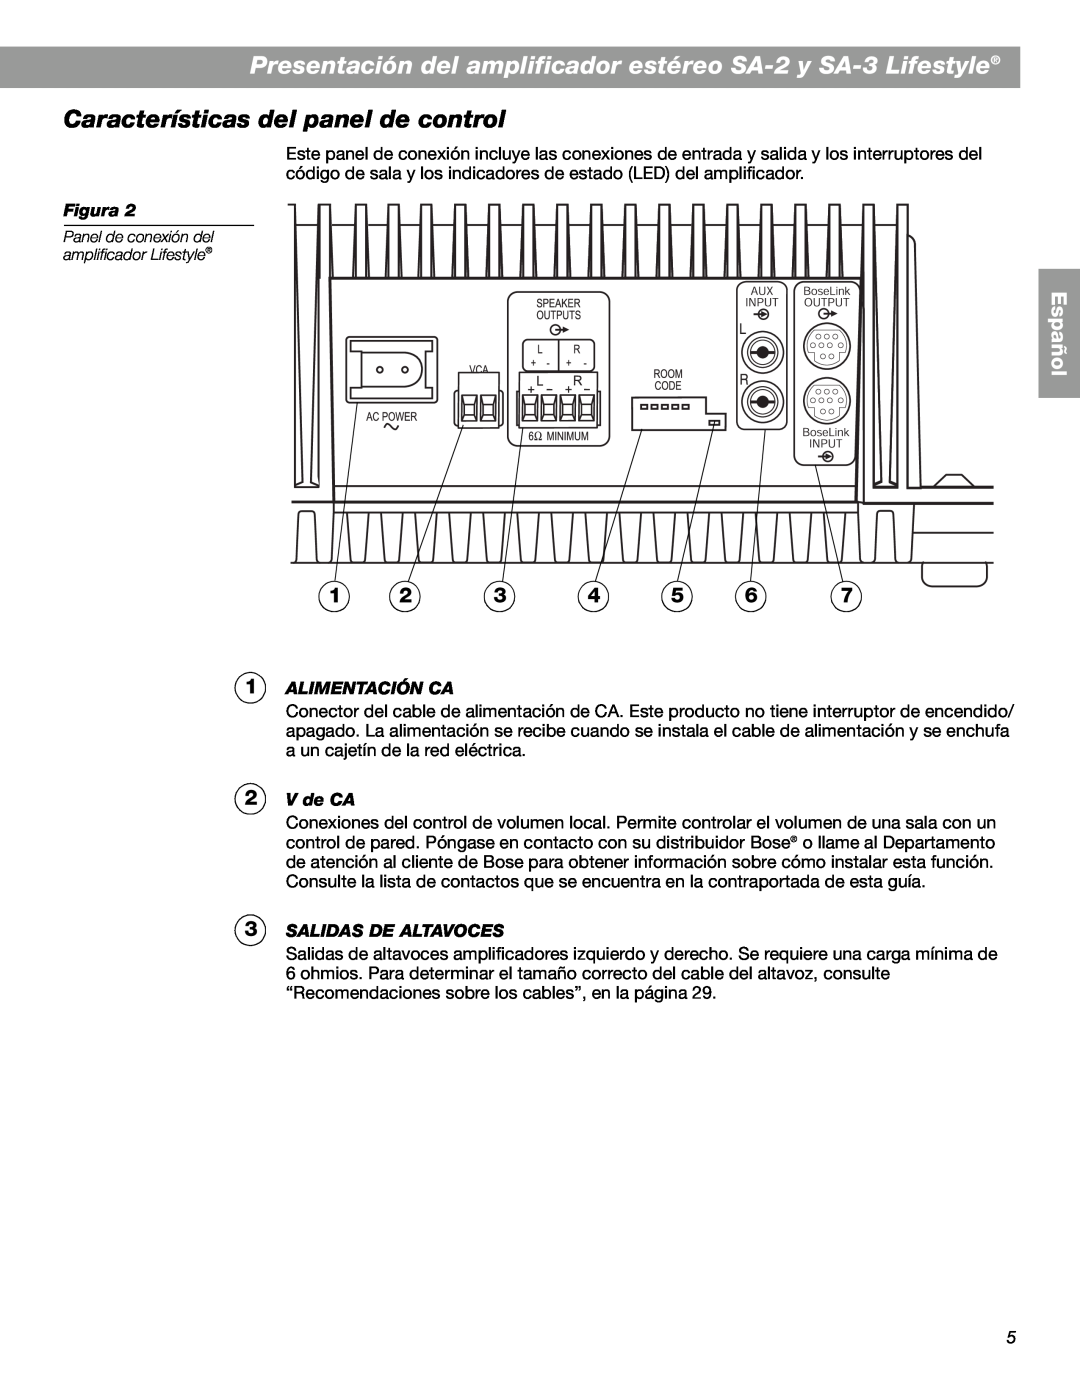 Bose SA-3, SA-2 manual Características del panel de control, Alimentación Ca, V de CA, Salidas De Altavoces, Español, Figura 